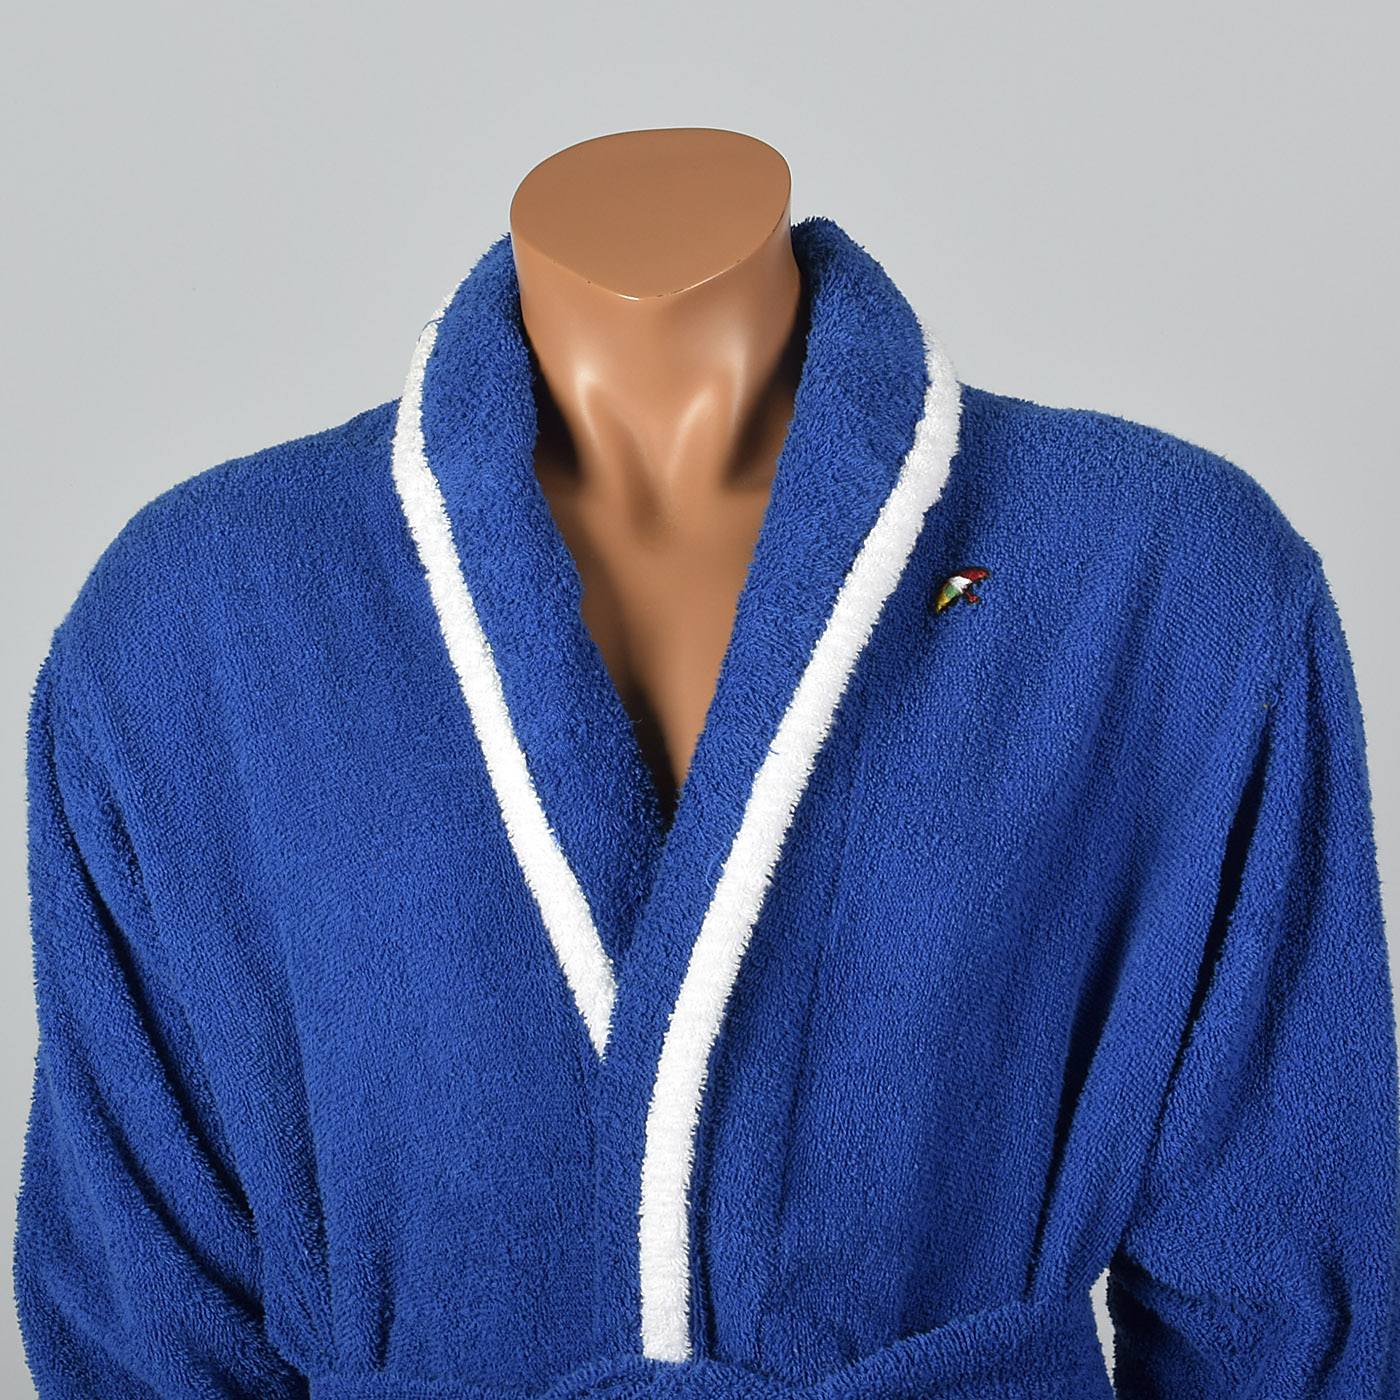 1960s Mens Blue Terry Cloth Robe